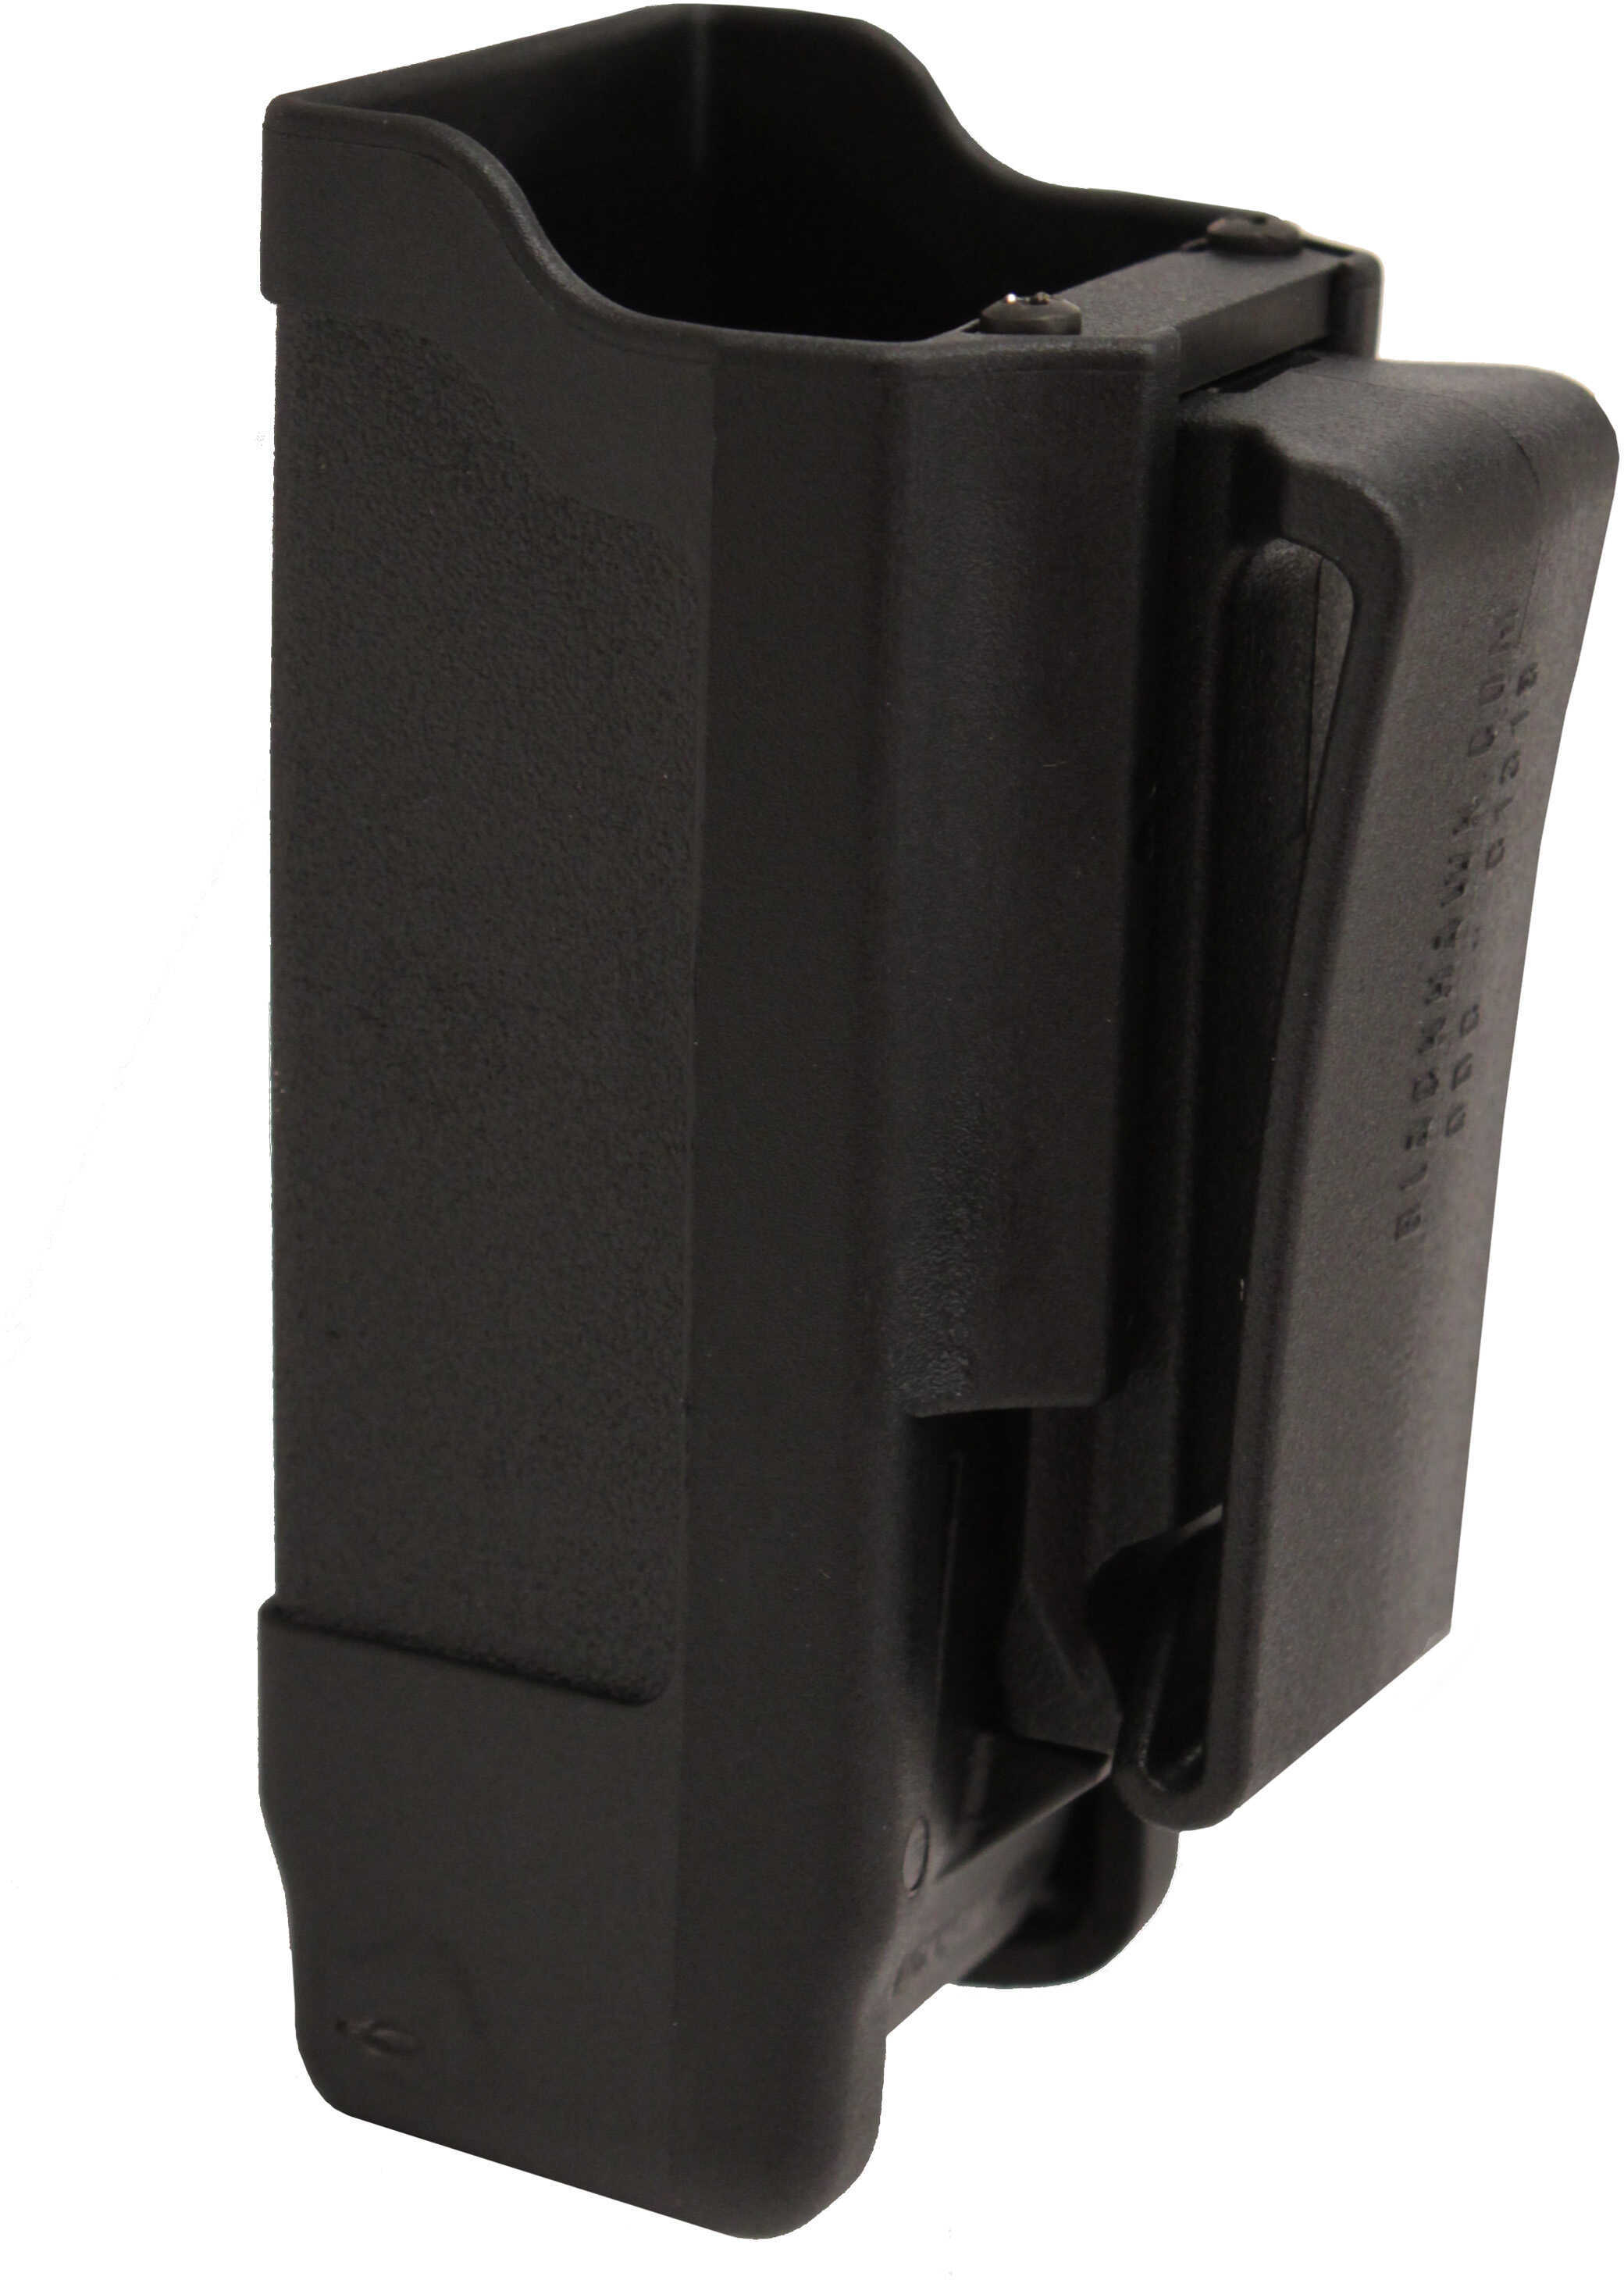 BlackHawk Products Group Carbon-Fiber Single Magazine Case Double stack 9mm/.40 Caliber - Built-in tension spri 410600PBK